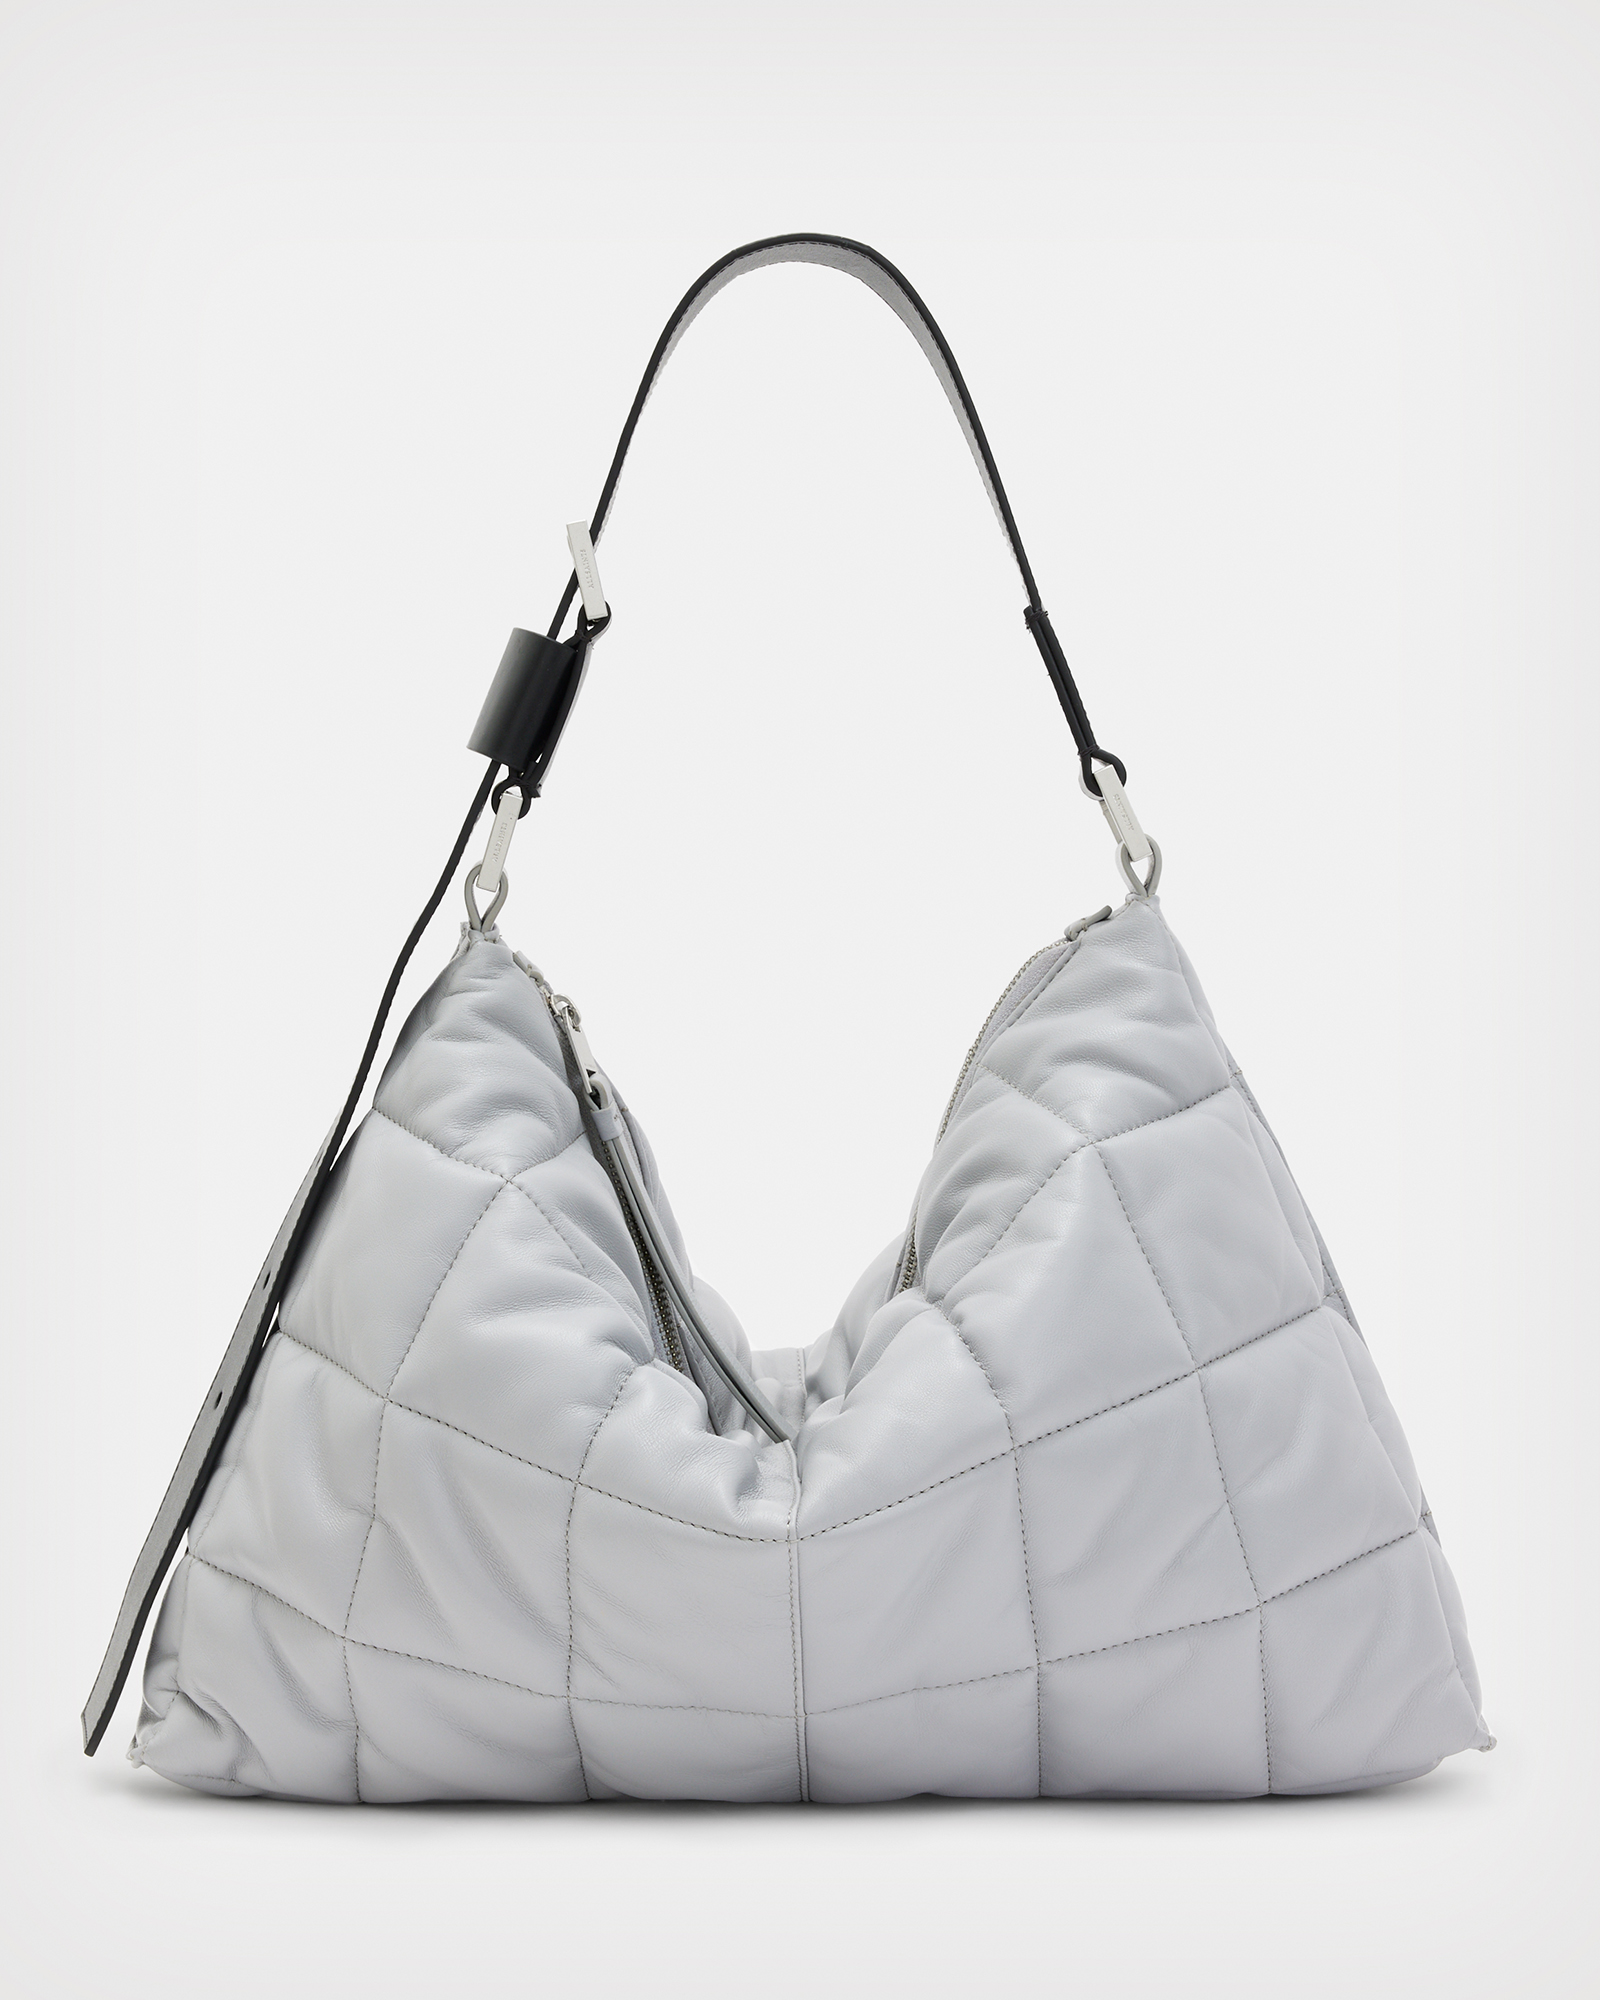 🍀Lucky Brand "Francoise" Hobo Shoulder bag Gray Pebbled Leather  ‏ $189.00 EUC